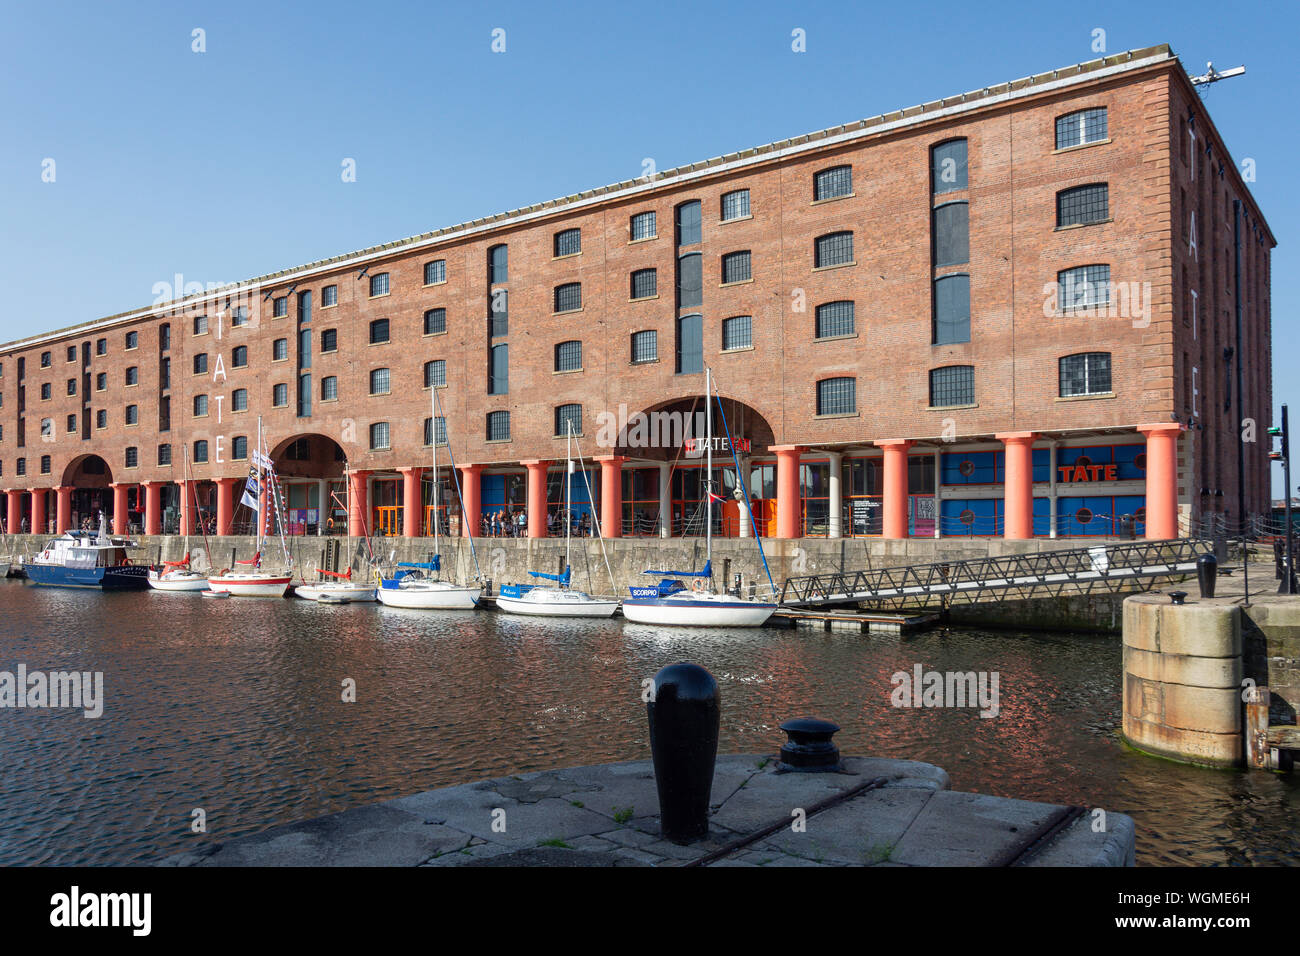 The Colonnades, Royal Albert Dockand, Liverpool Waterfront, Liverpool, Merseyside, England, United Kingdom Stock Photo